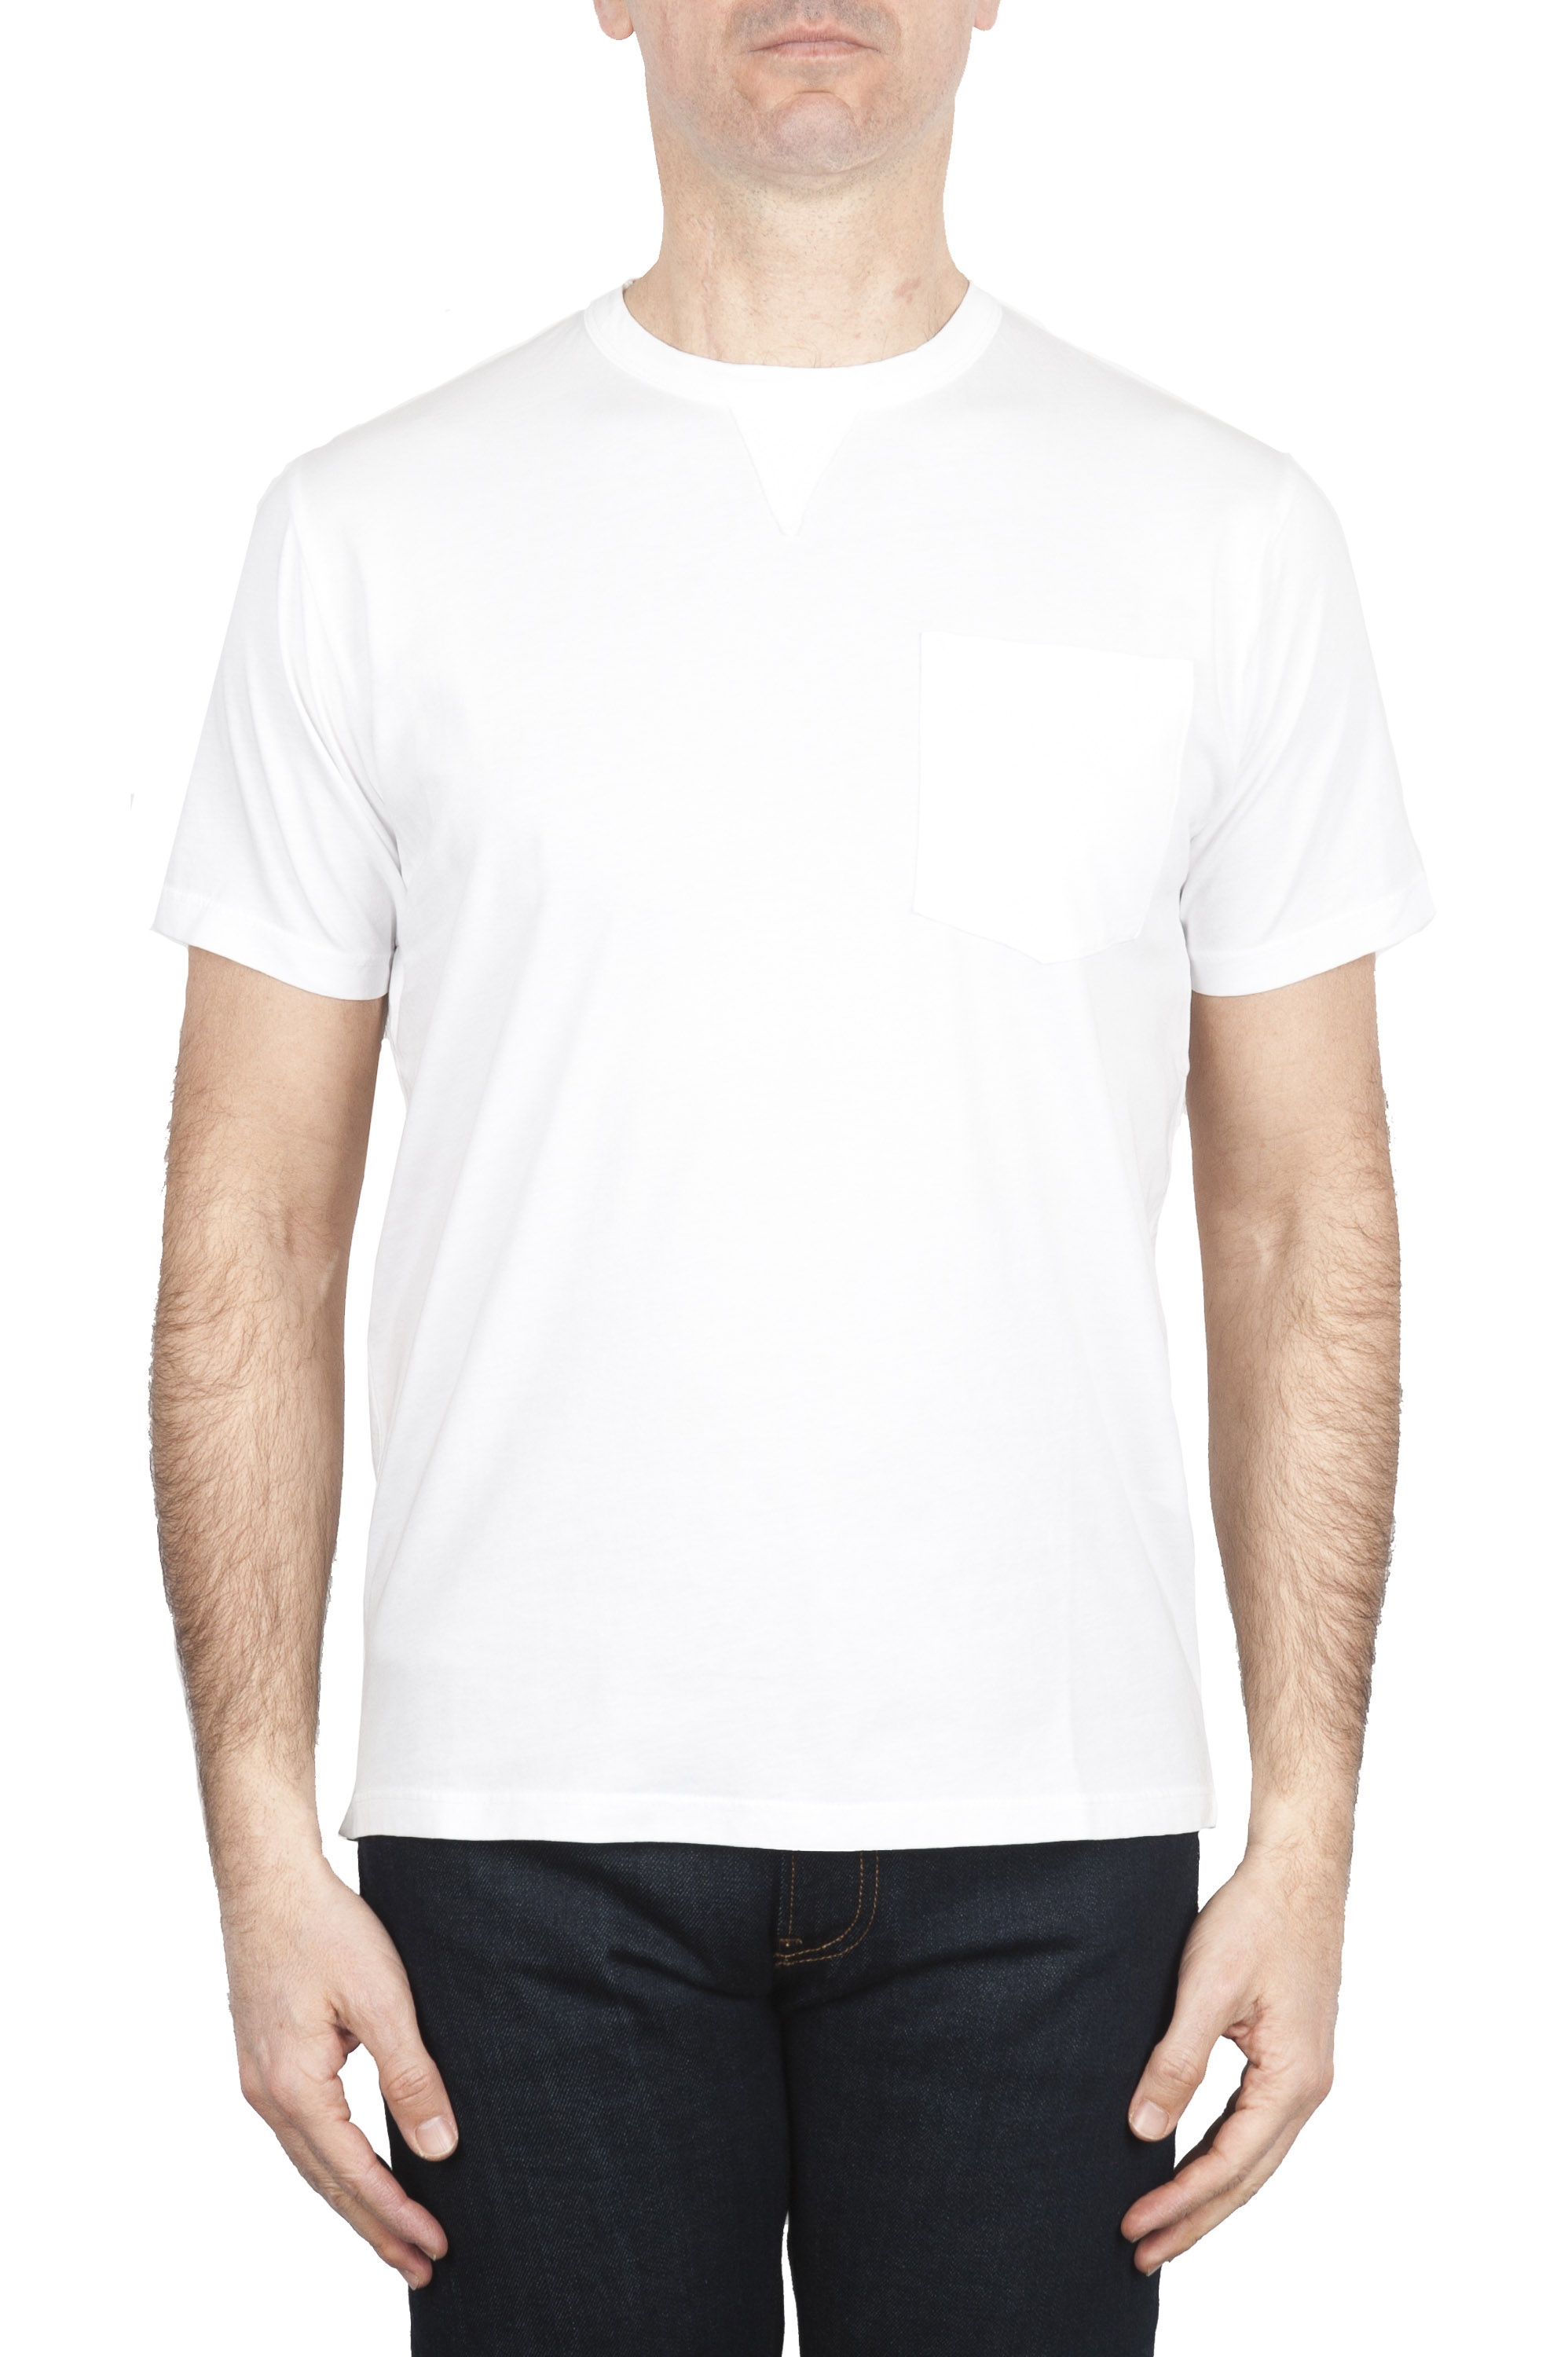 SBU 01655 T-shirt girocollo in cotone con taschino bianca 01